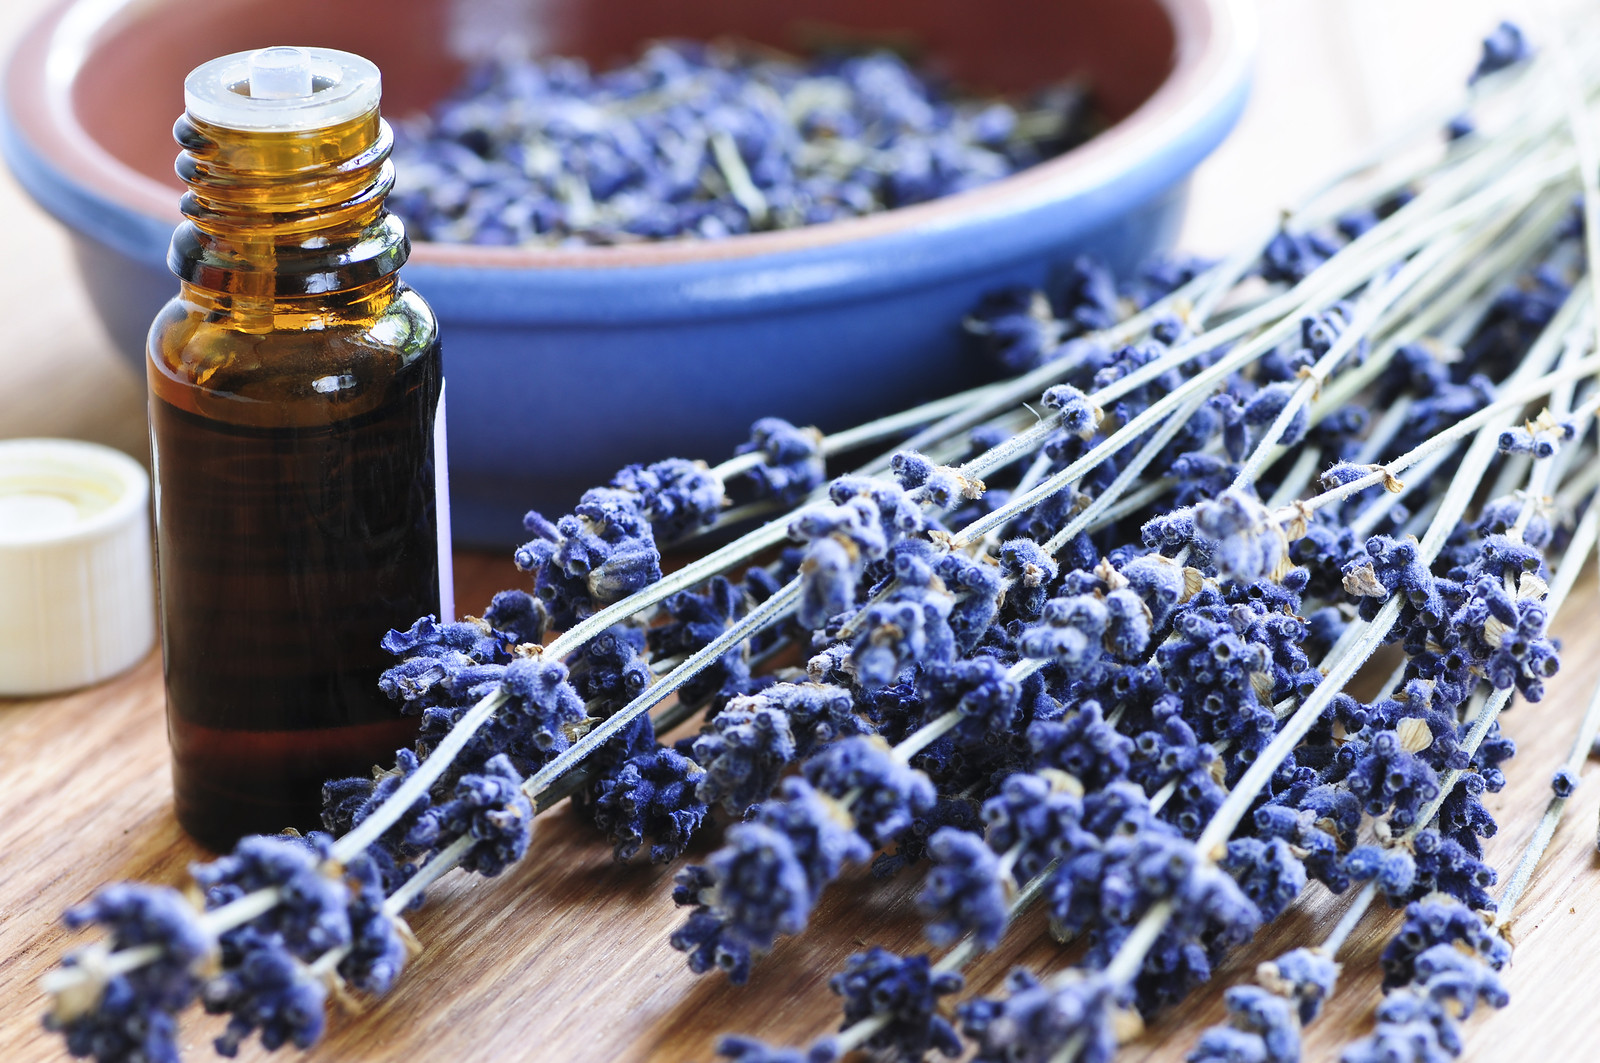 Lavender - an essential oil for treating spider bites.